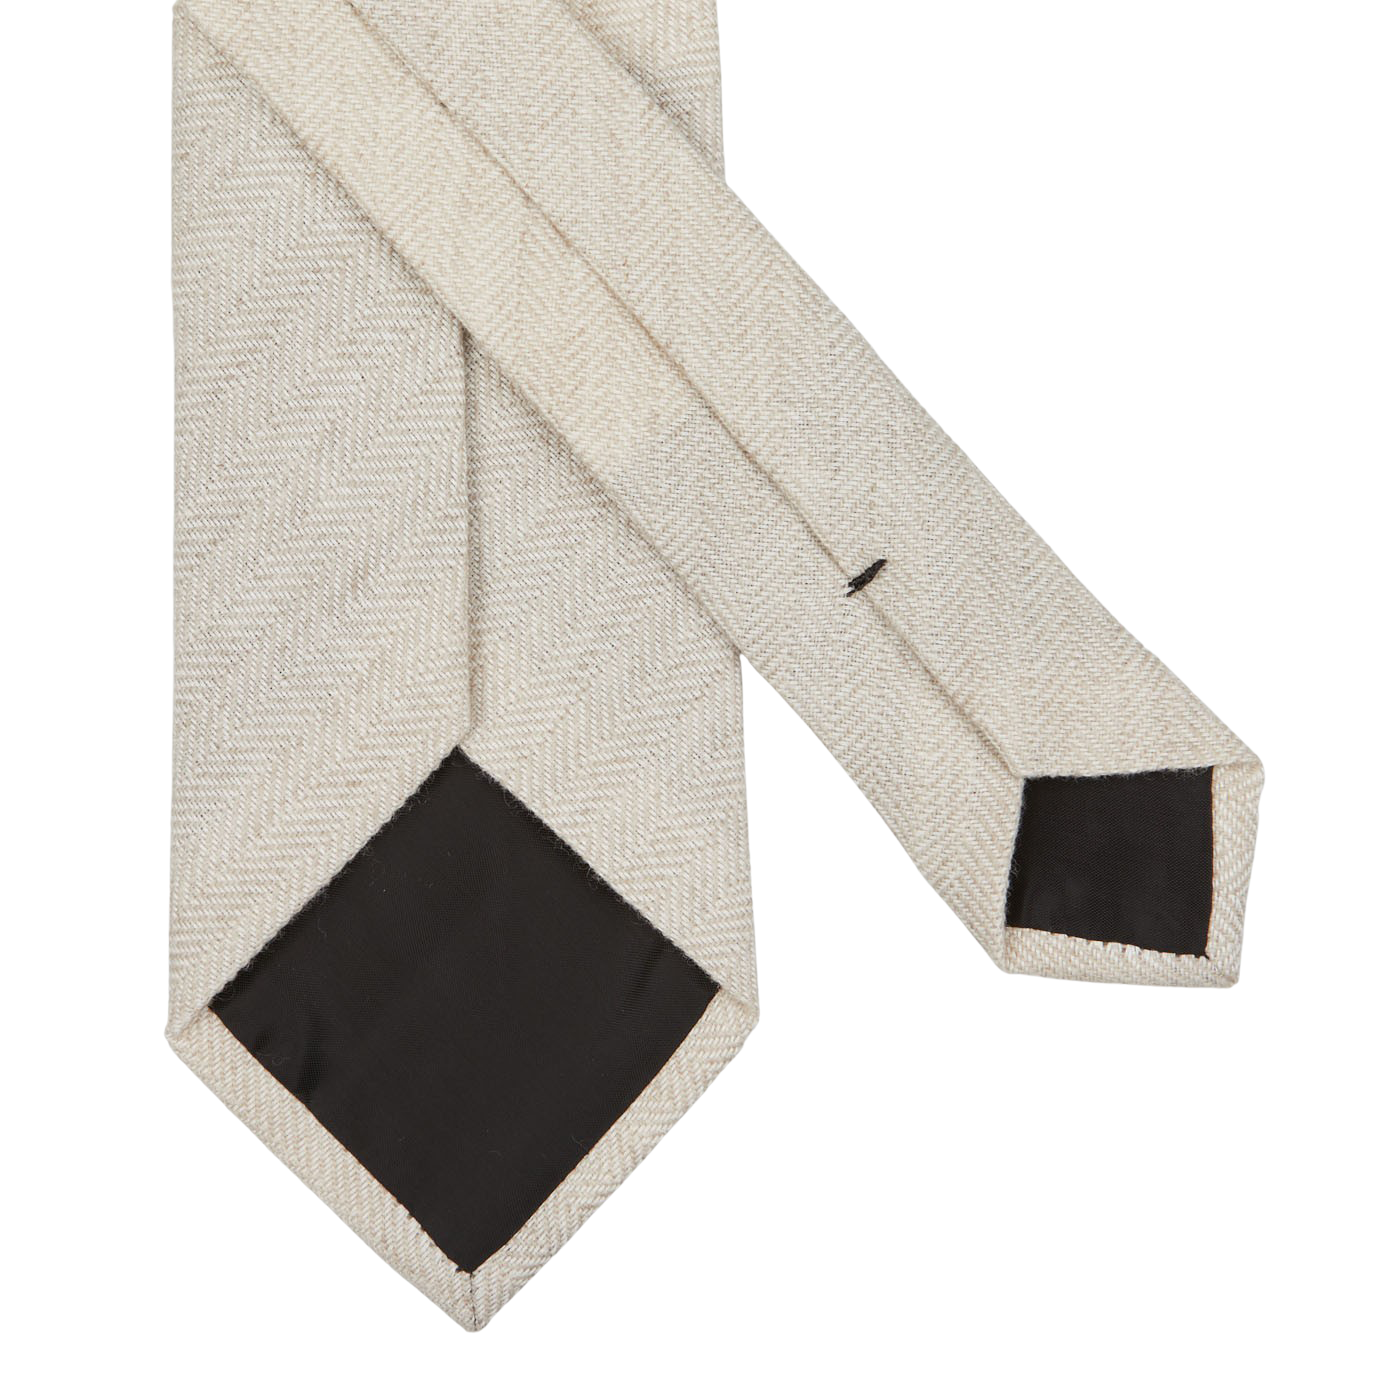 An Amanda Christensen Light Beige Herringbone Wool Silk Lined Tie on a white background.